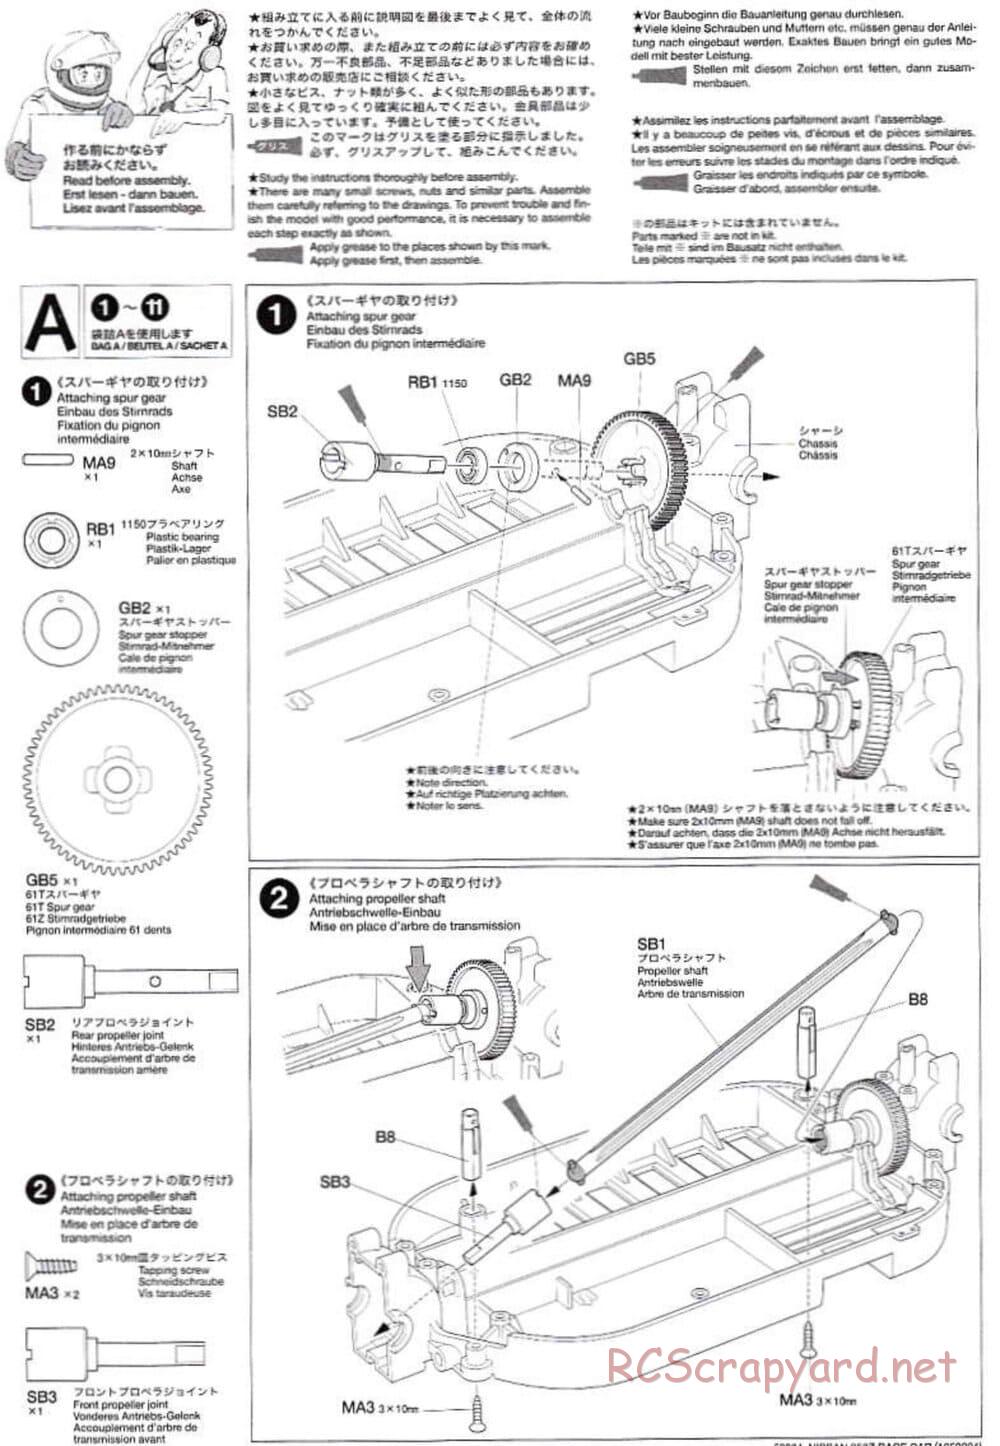 Tamiya - Nissan 350Z Race-Car - TT-01 Chassis - Manual - Page 4